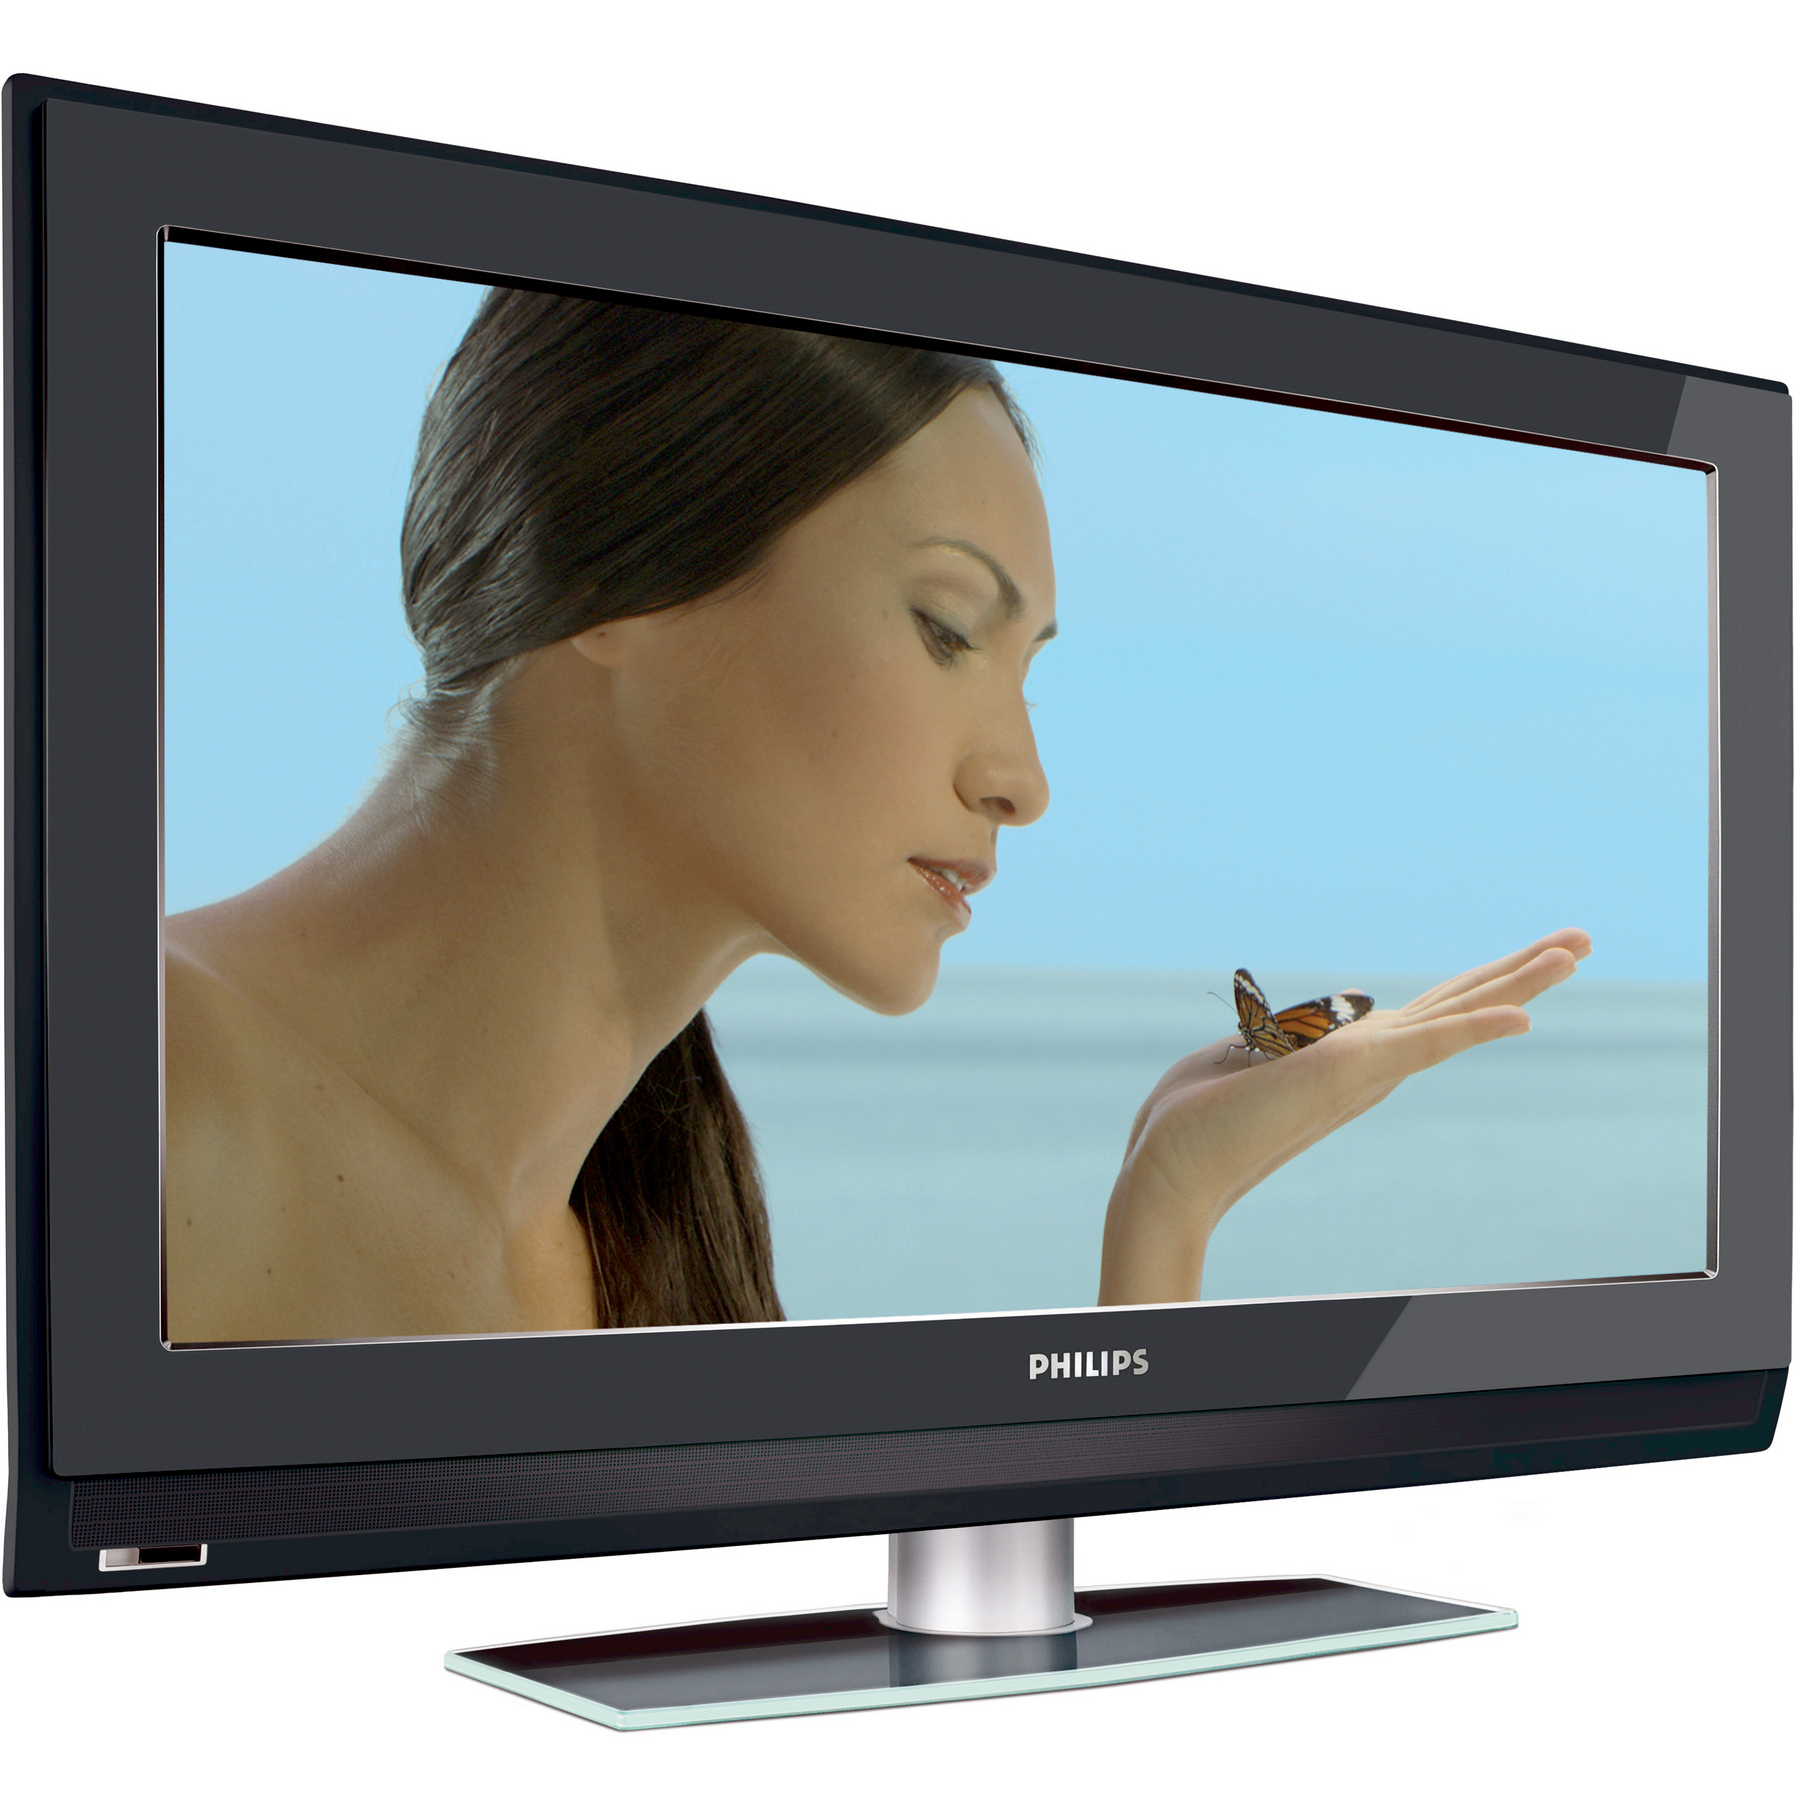 Mindful Advance shoulder Specs Philips 32PFL7332 32" LCD HD Ready widescreen flat TV TVs (32PFL7332 /98)